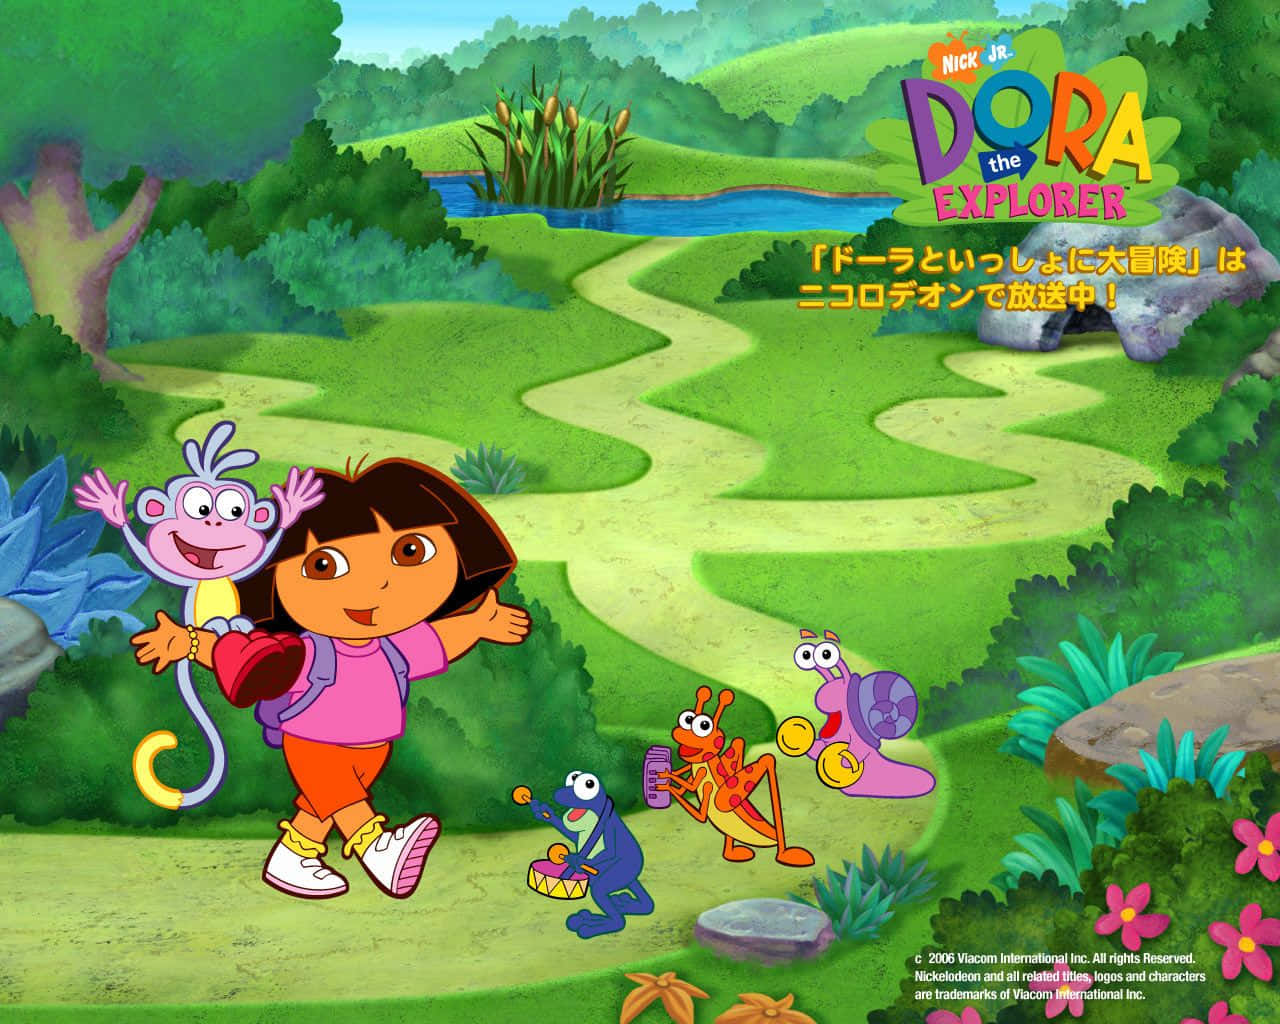 Dora the Explorer set to explore new adventures